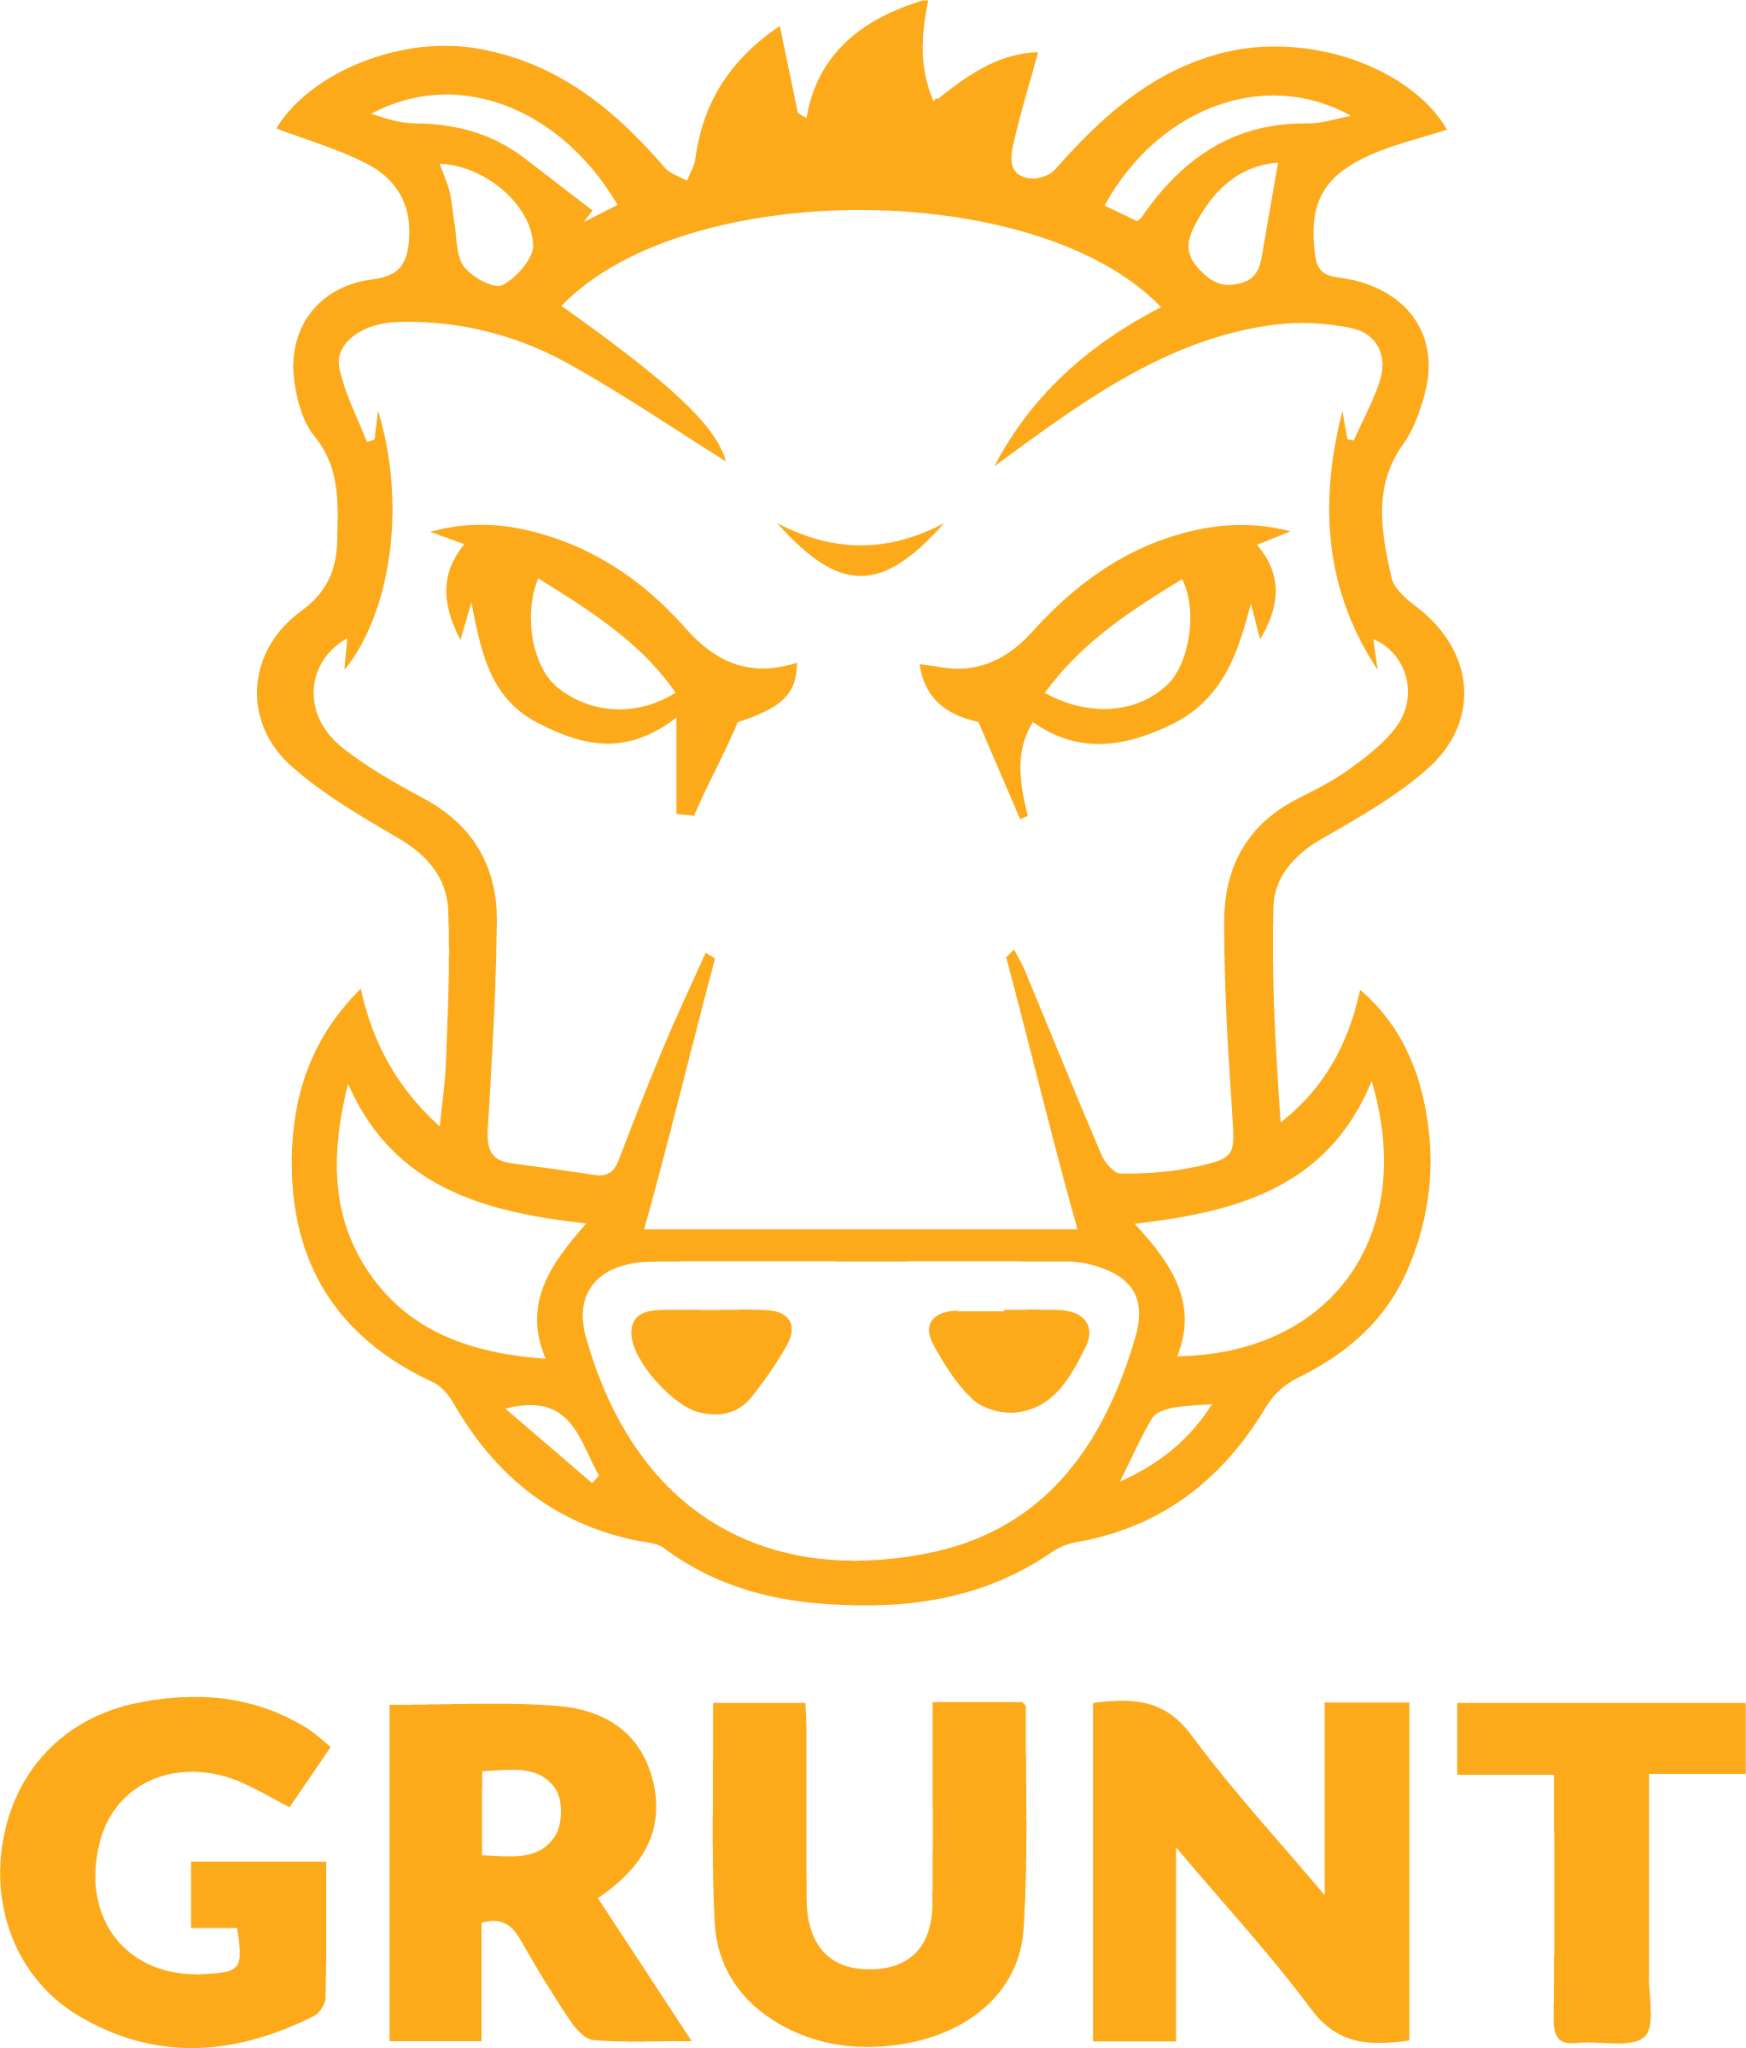 grunt line wordmark icon